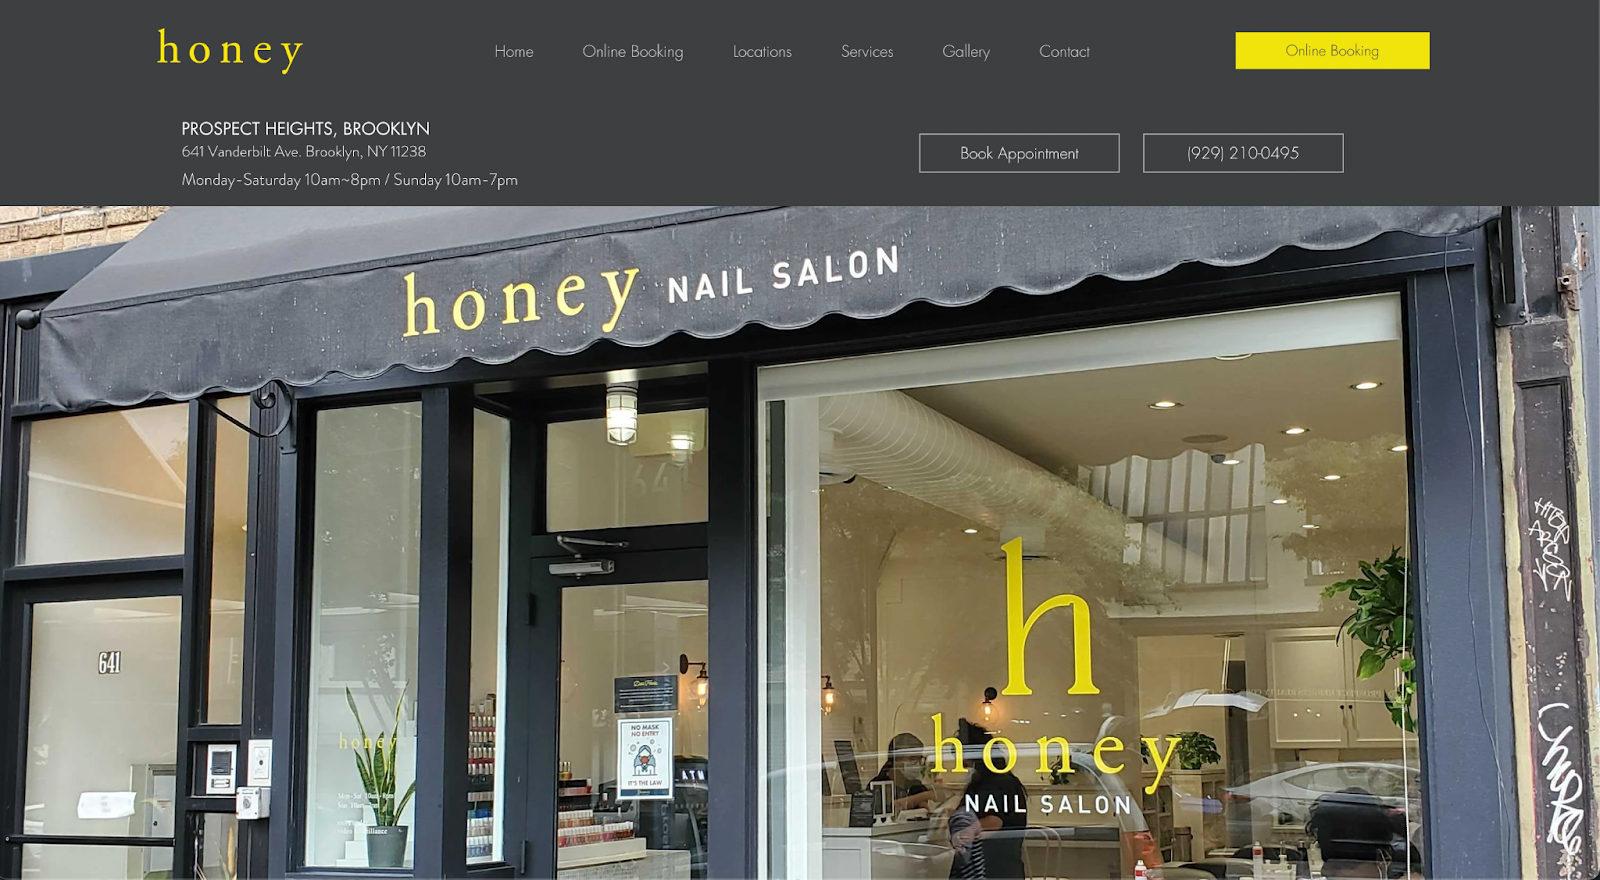 Best nail salon websites, example from Honey Nail Salon.